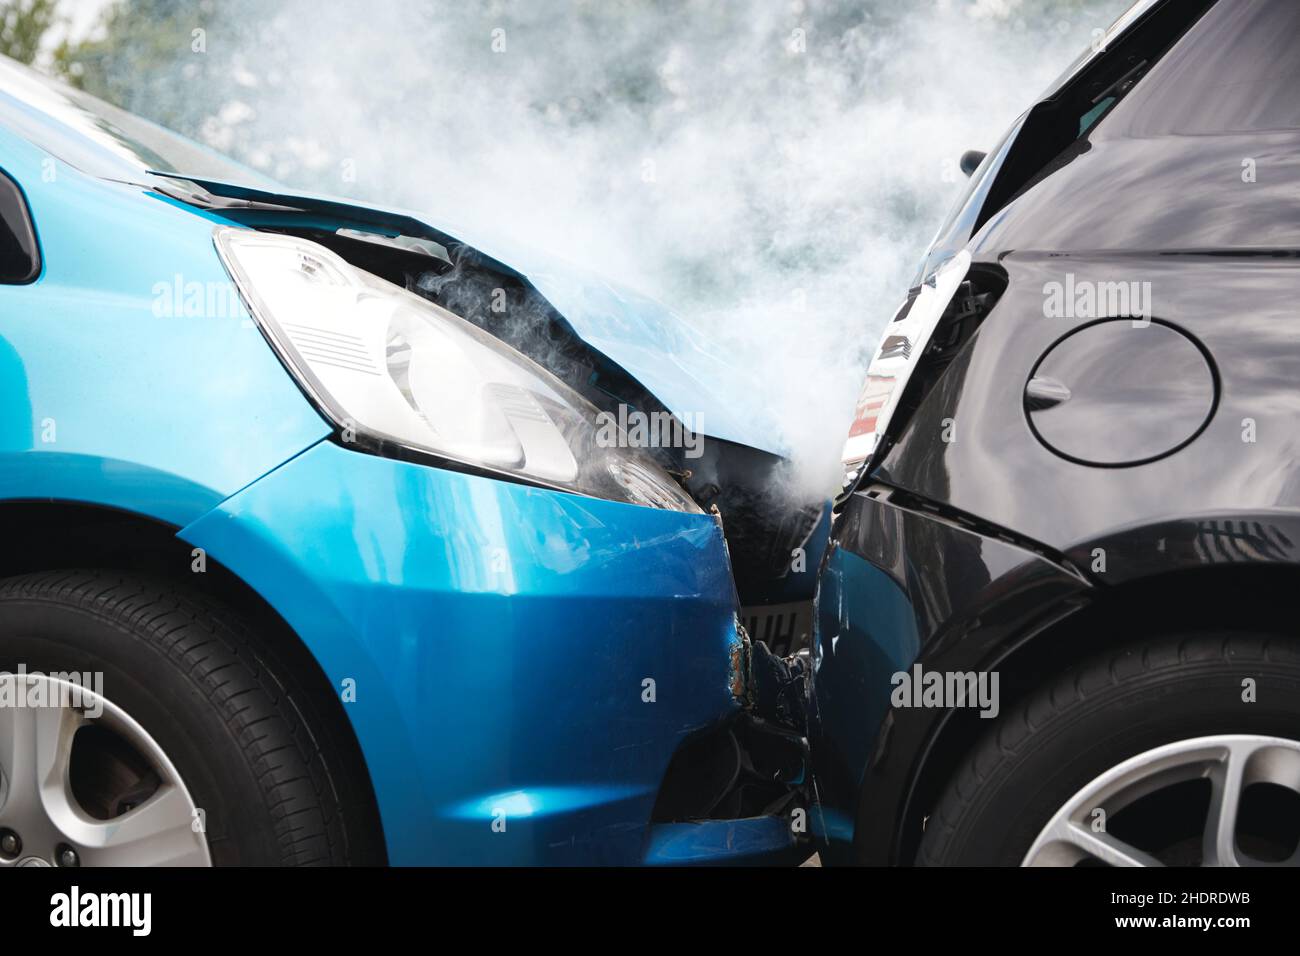 car body damage, rear end collision, car accident, car body damages, rear end collisions, accident, accidents, car accidents Stock Photo